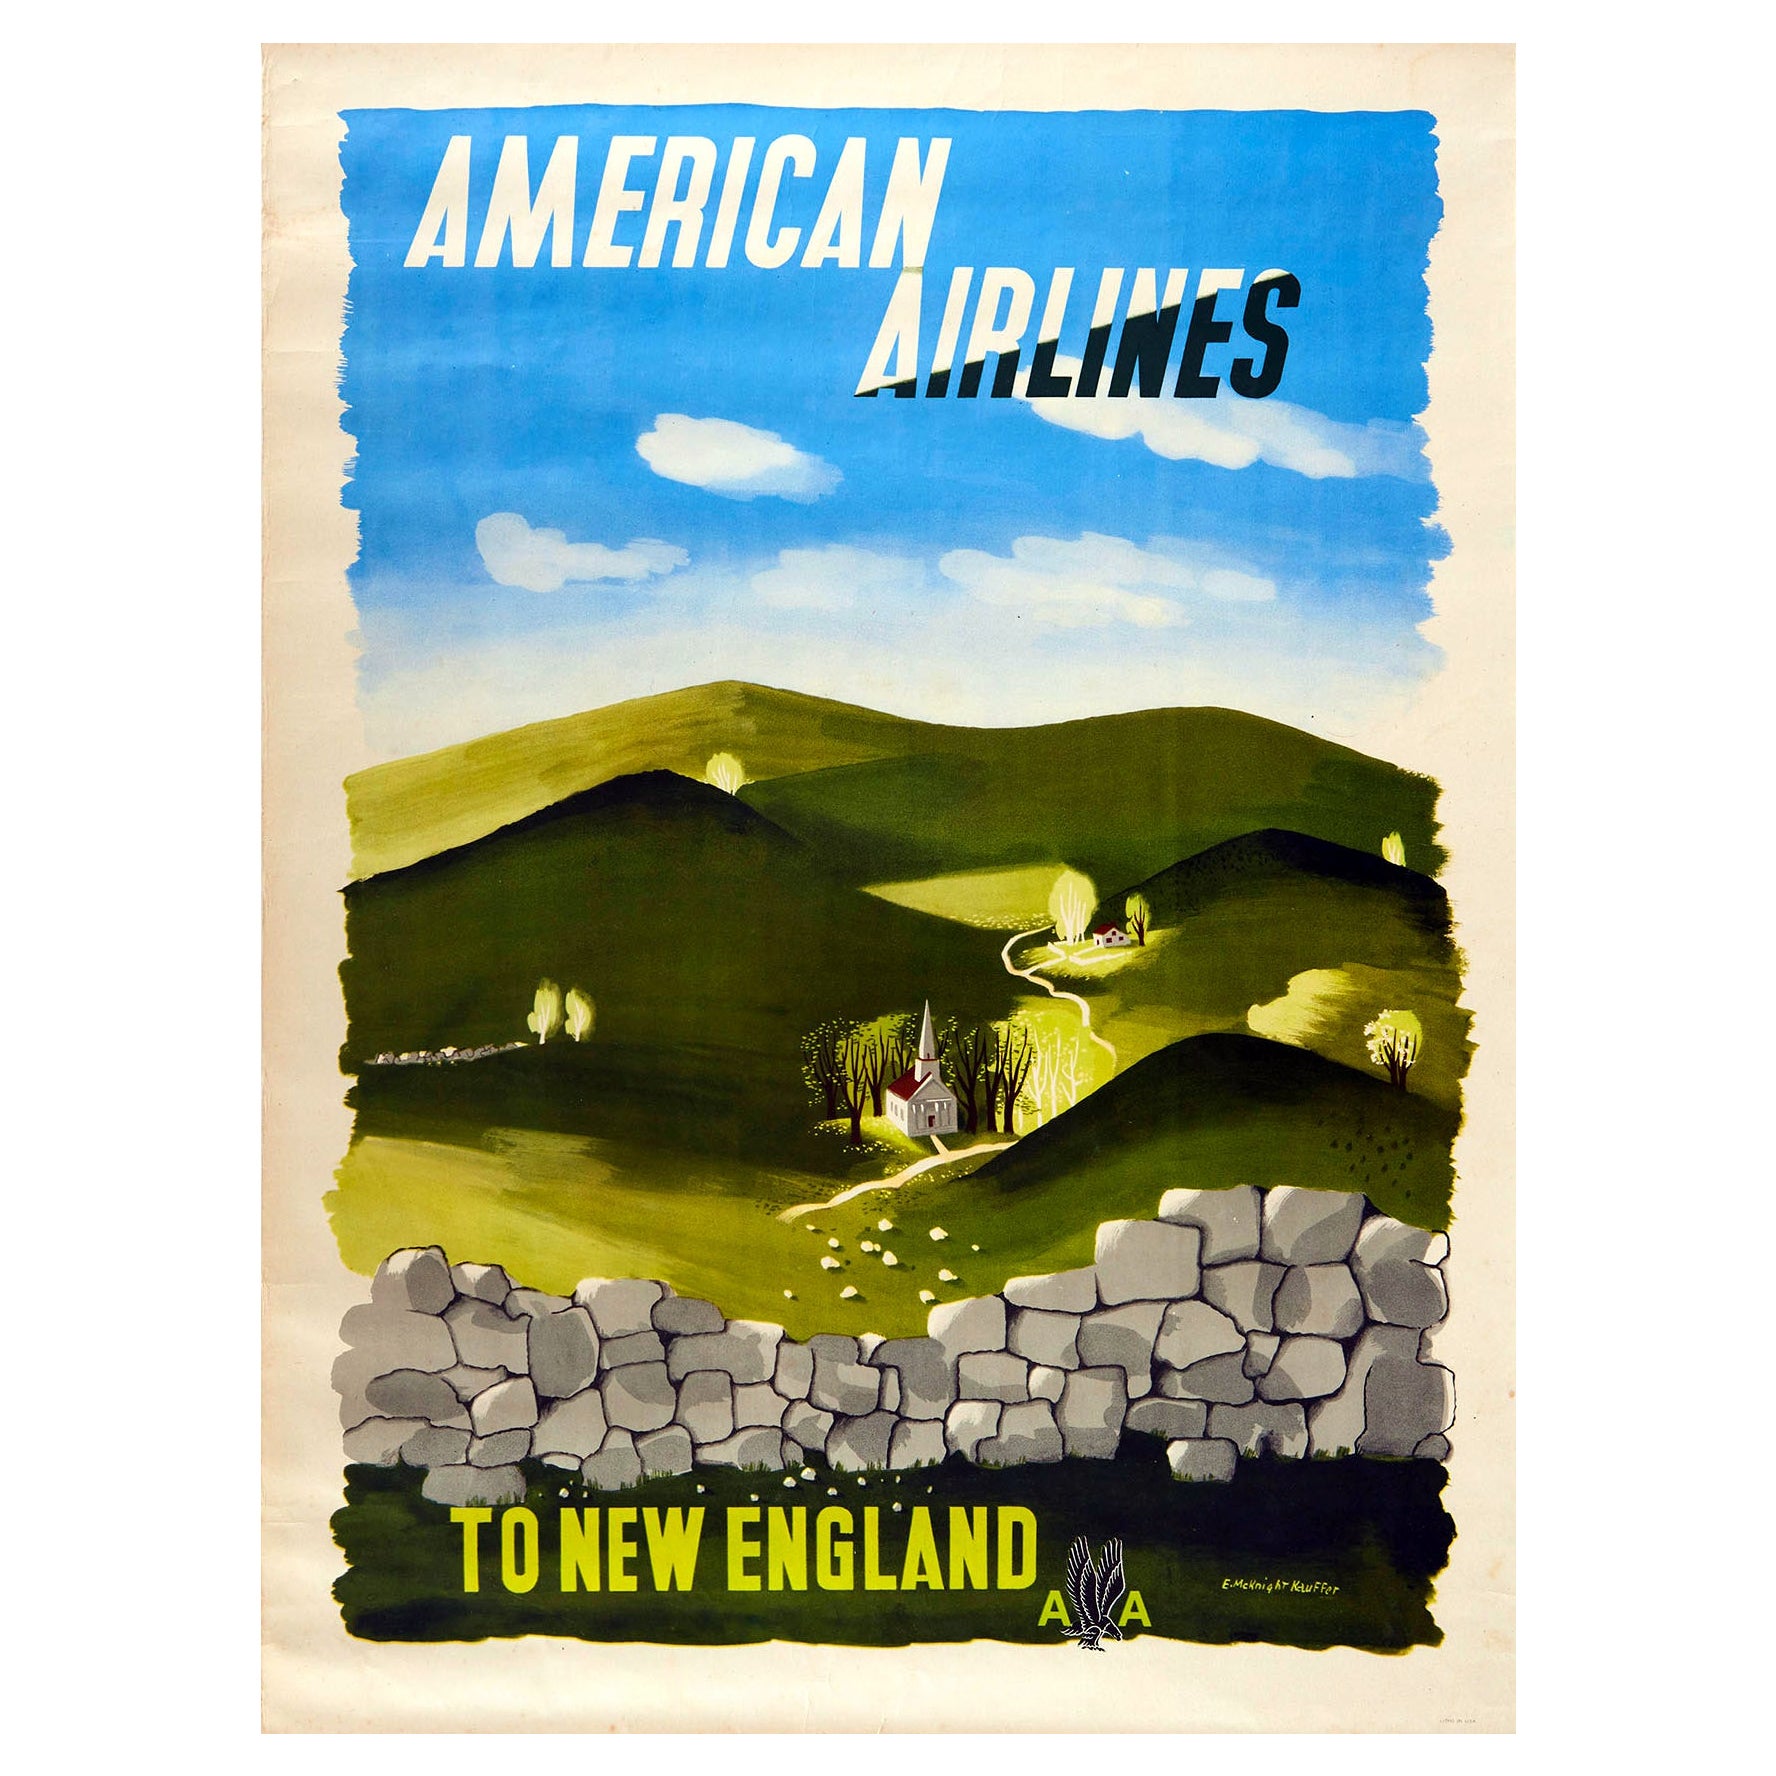 Original-Vintage-Reiseplakat American Airlines To New England, McKnight Kauffer im Angebot